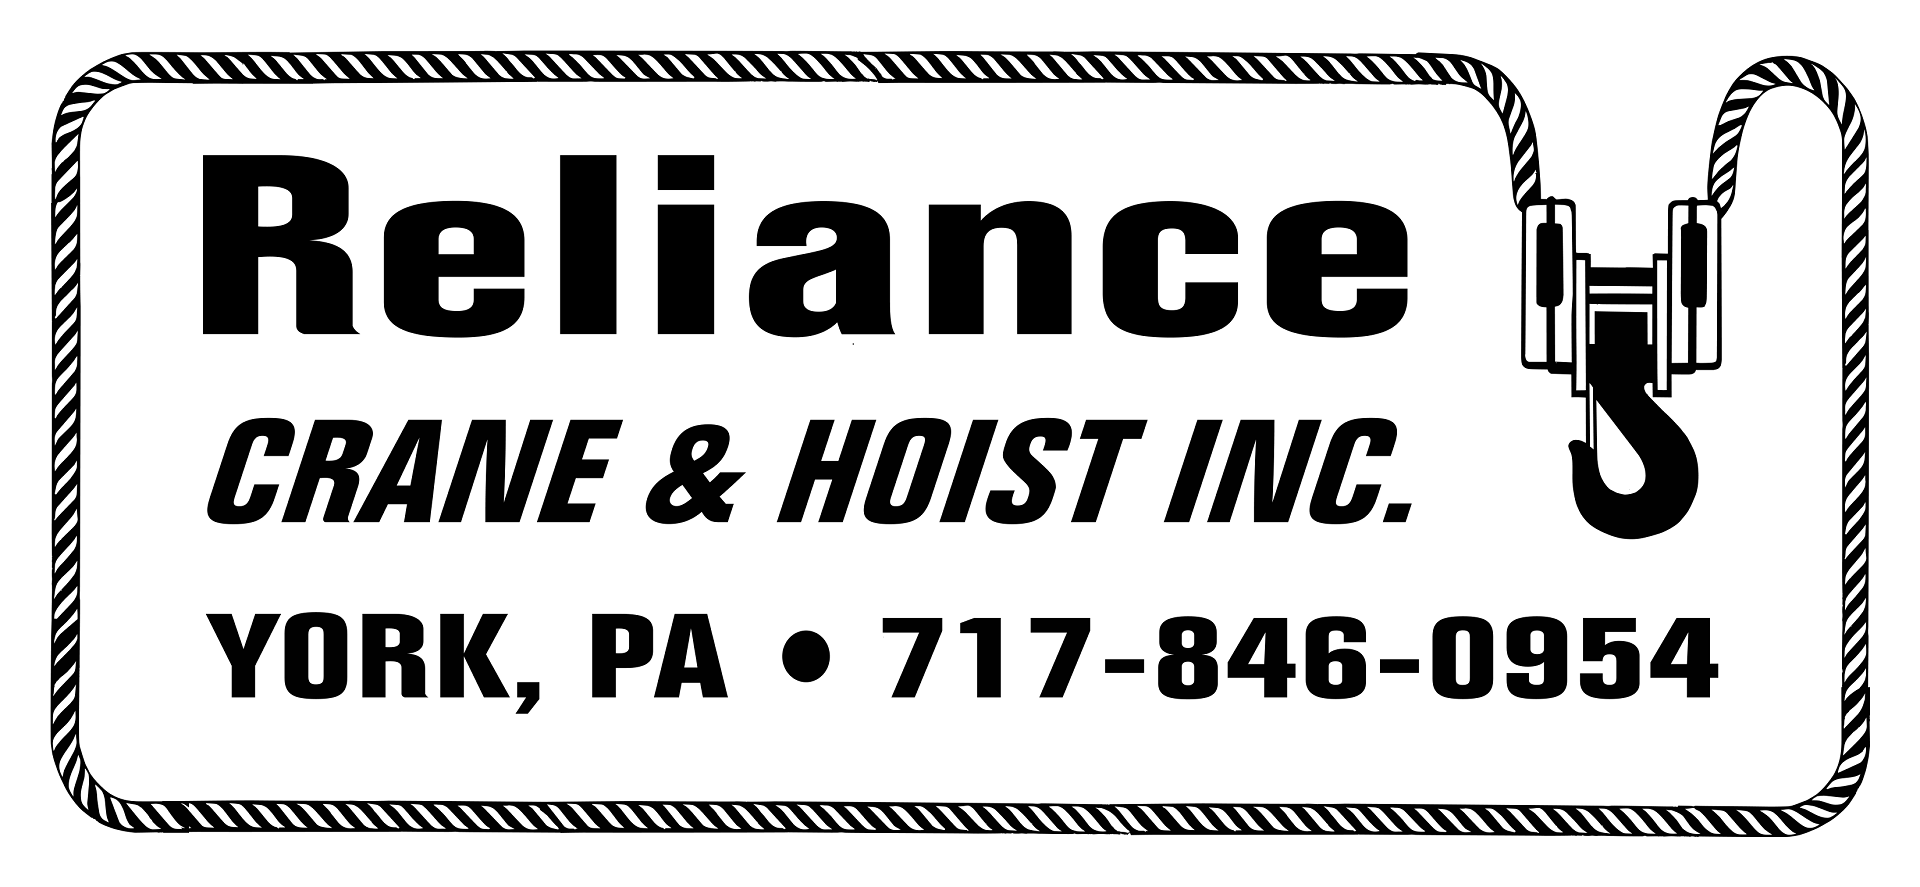 Reliance Crane & Hoist Inc.